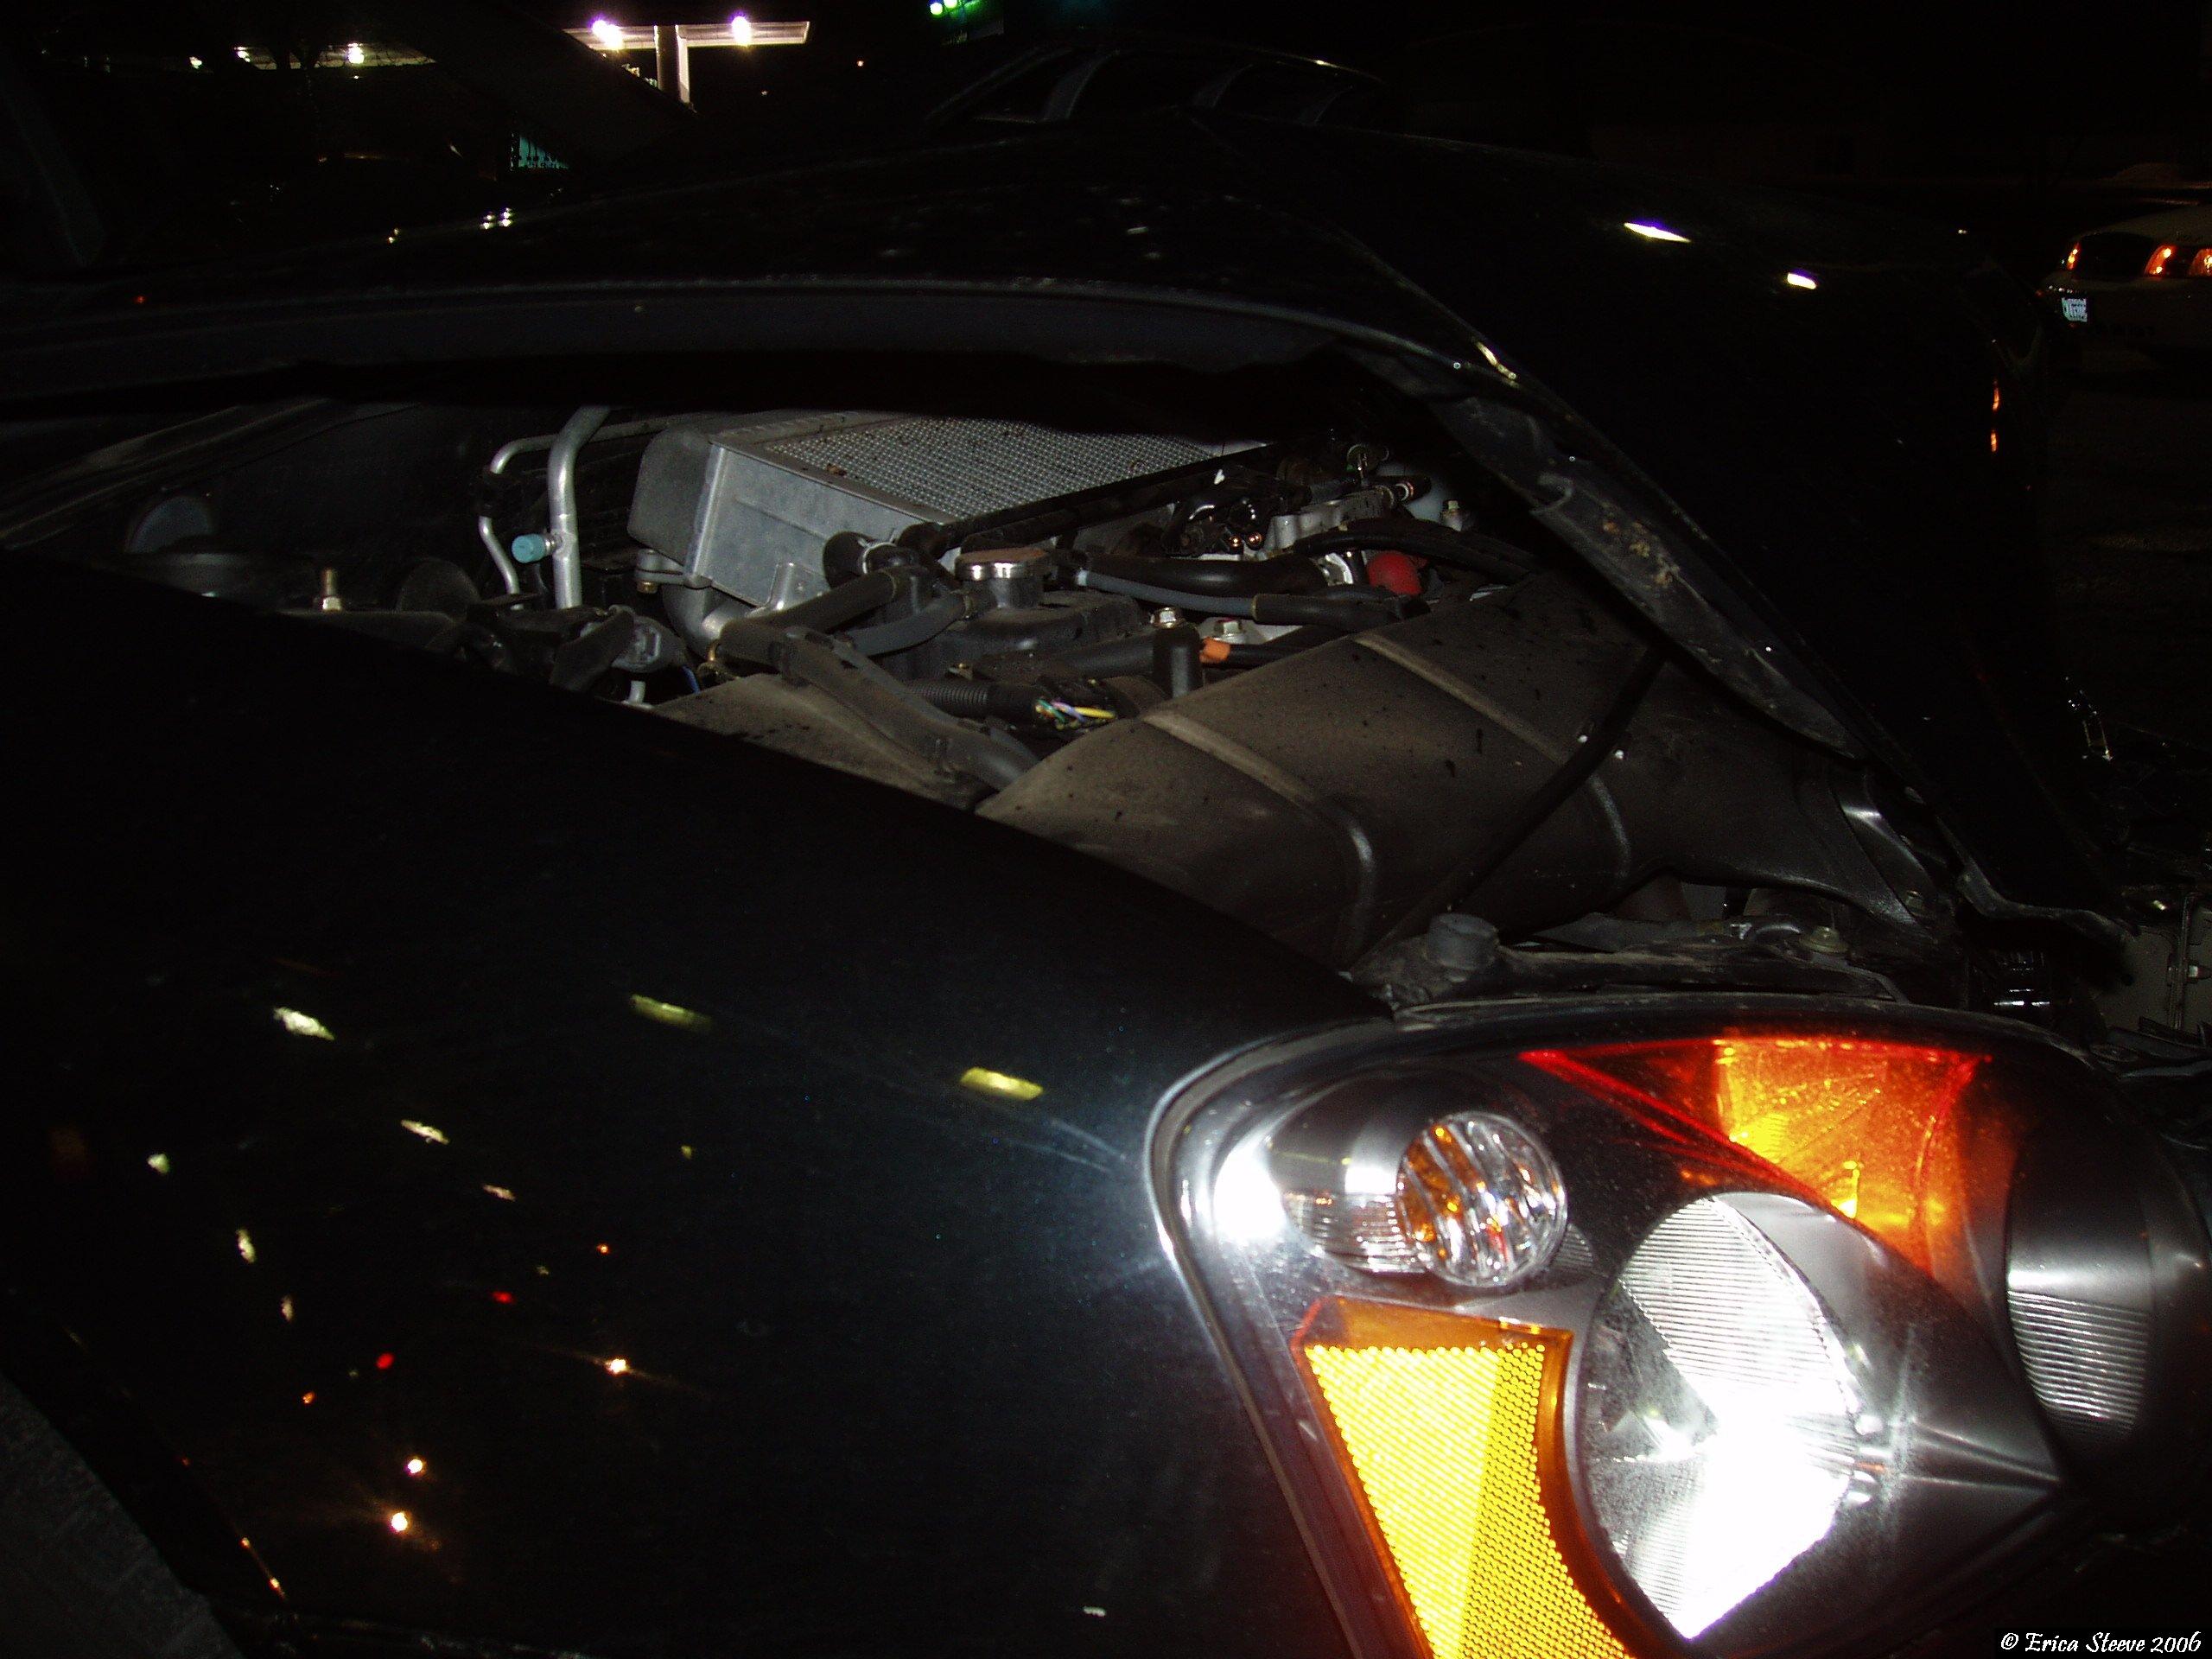 Passenger headlight's fine, another glimpse under hood